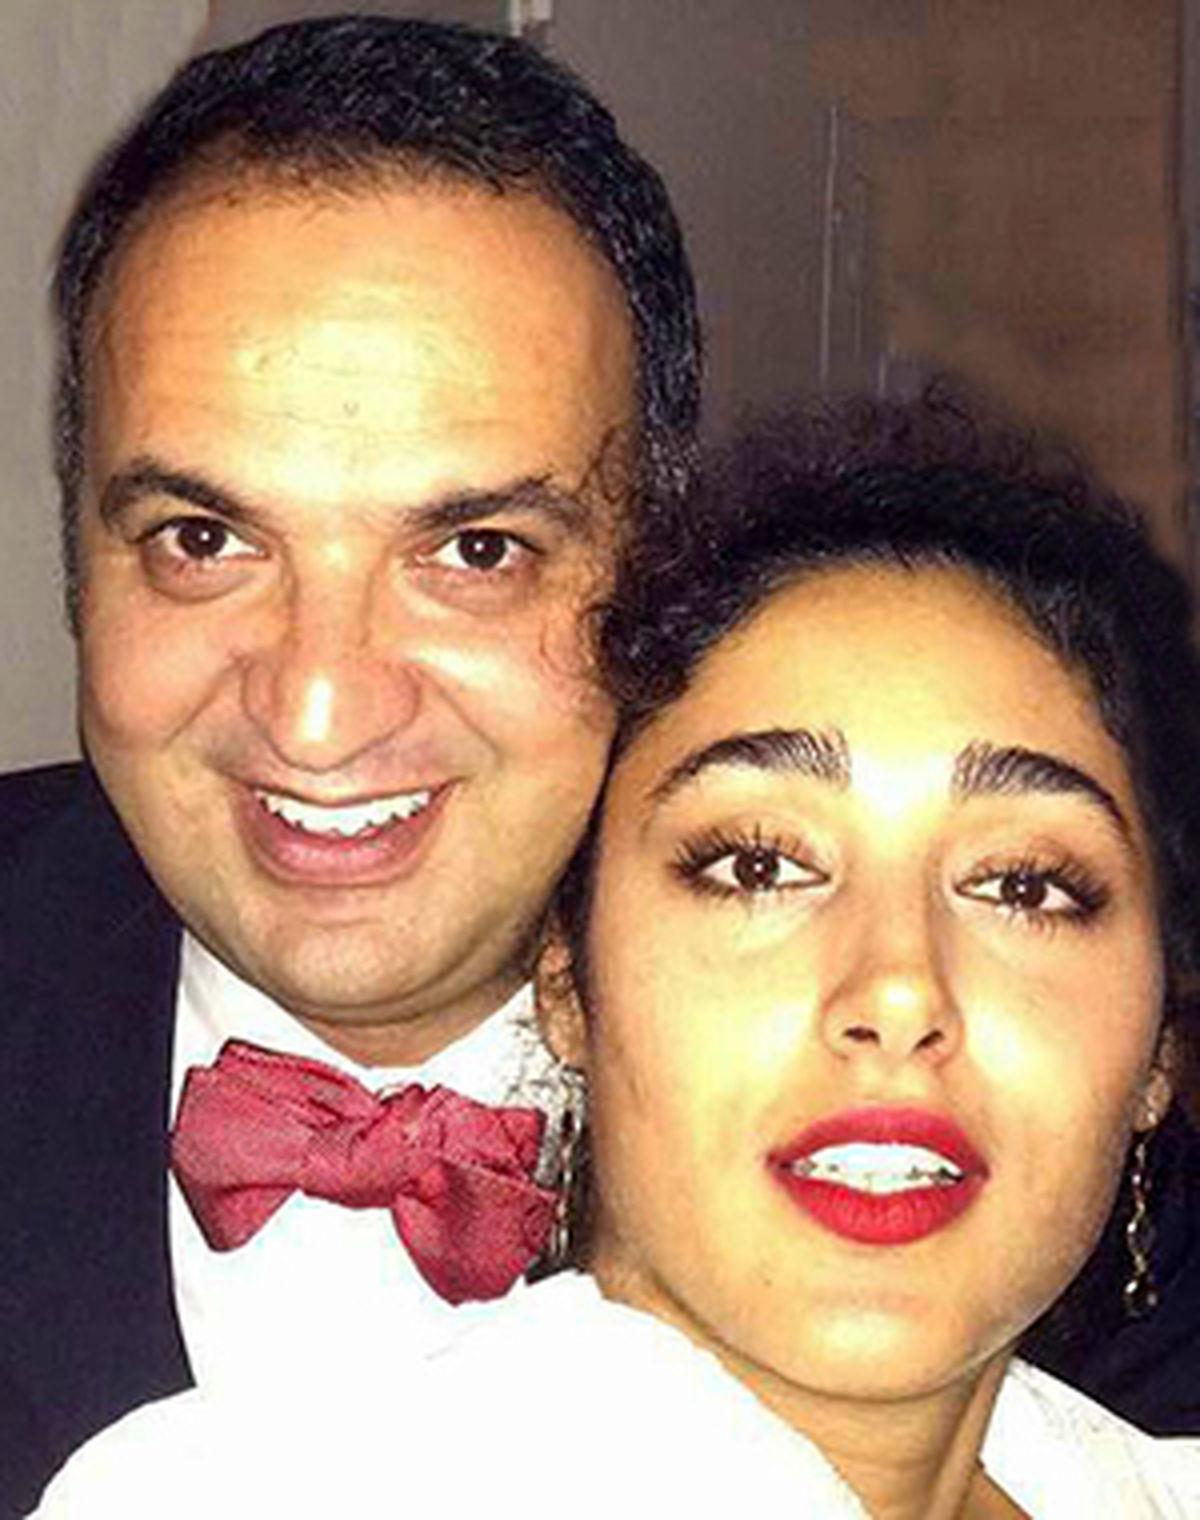 
گلشیفته فراهانی با مجری معروف تلویزیون ازدواج کرد + عکس
